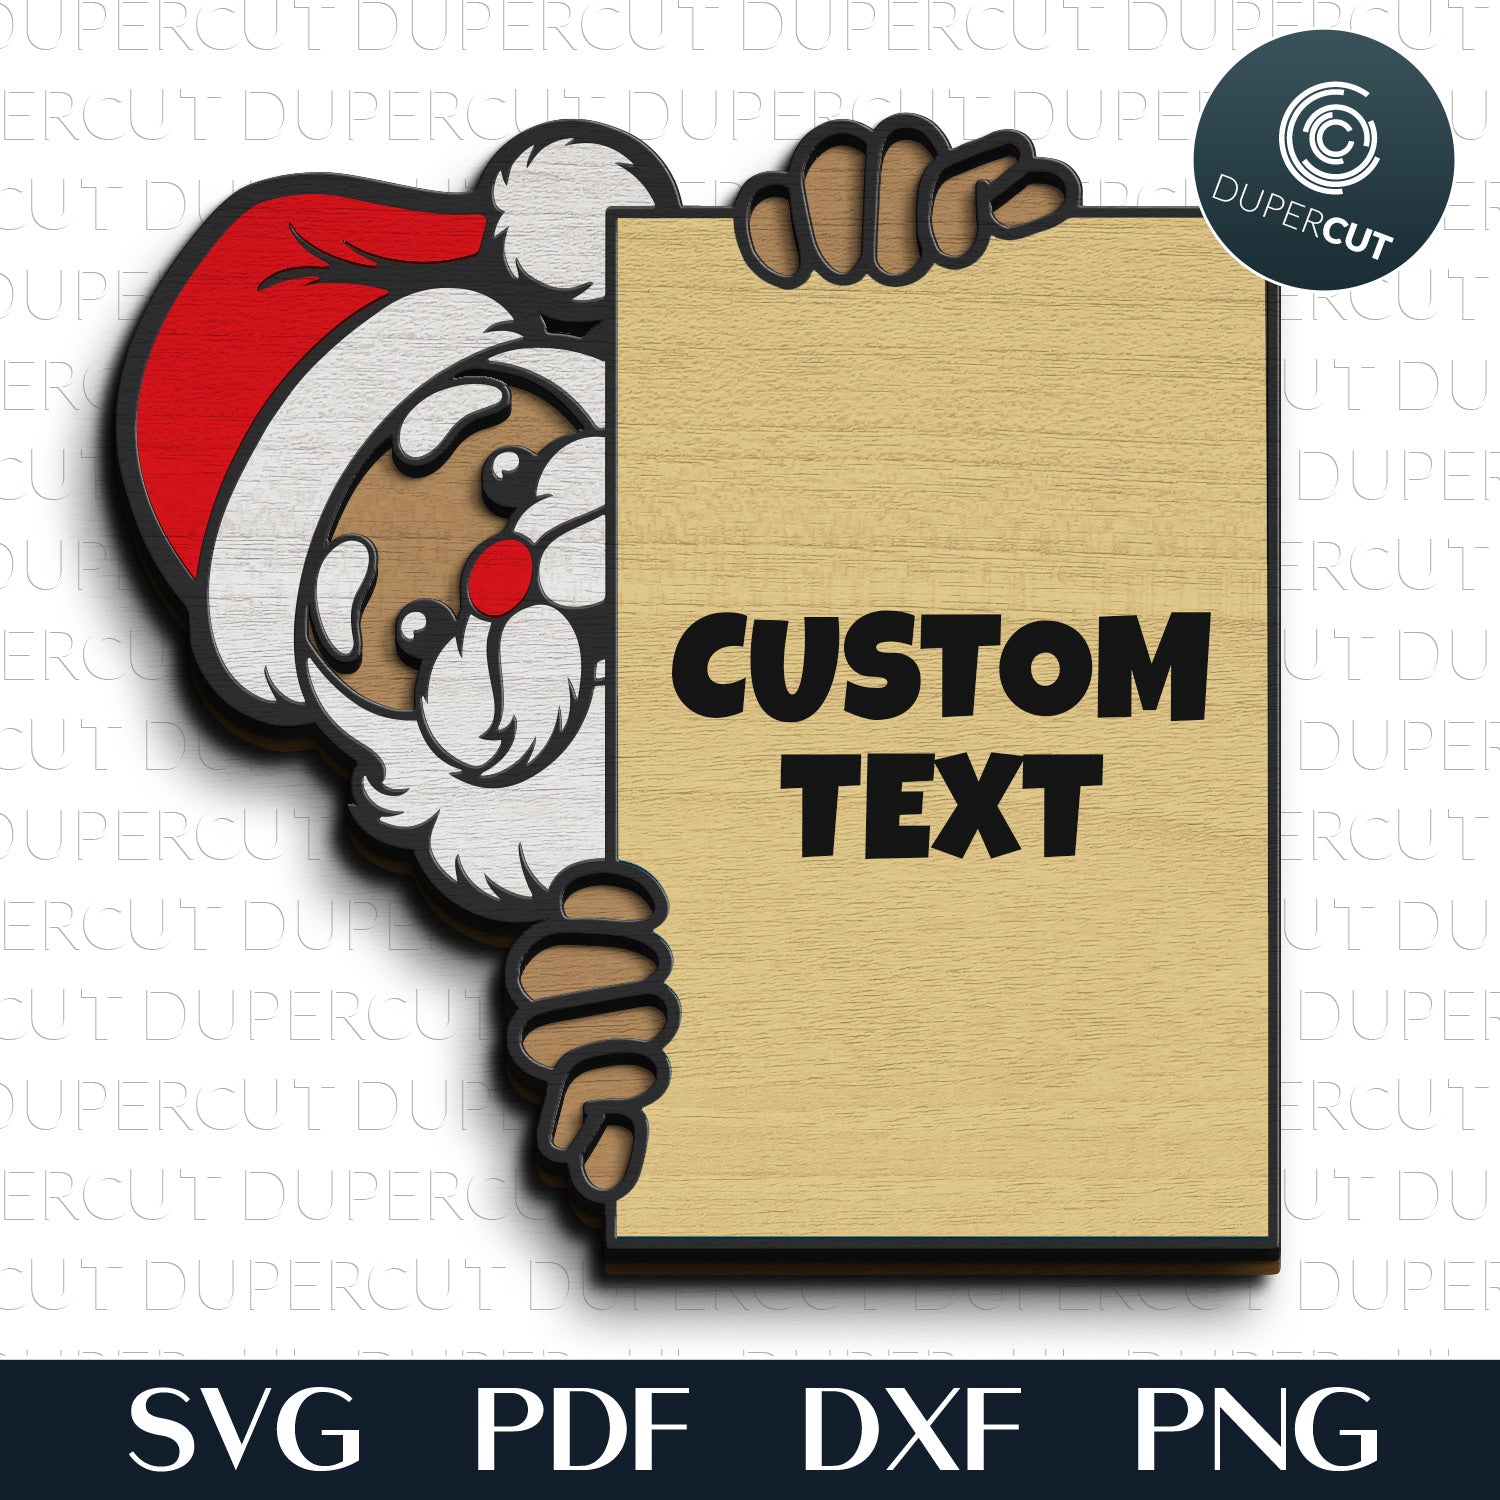 Peeking Santa sign, add custom text, personalized Christmas decoration - SVG DXF vector layered files for Glowforge, Cricut, X-tool, CNC laser machines by www.DuperCut.com